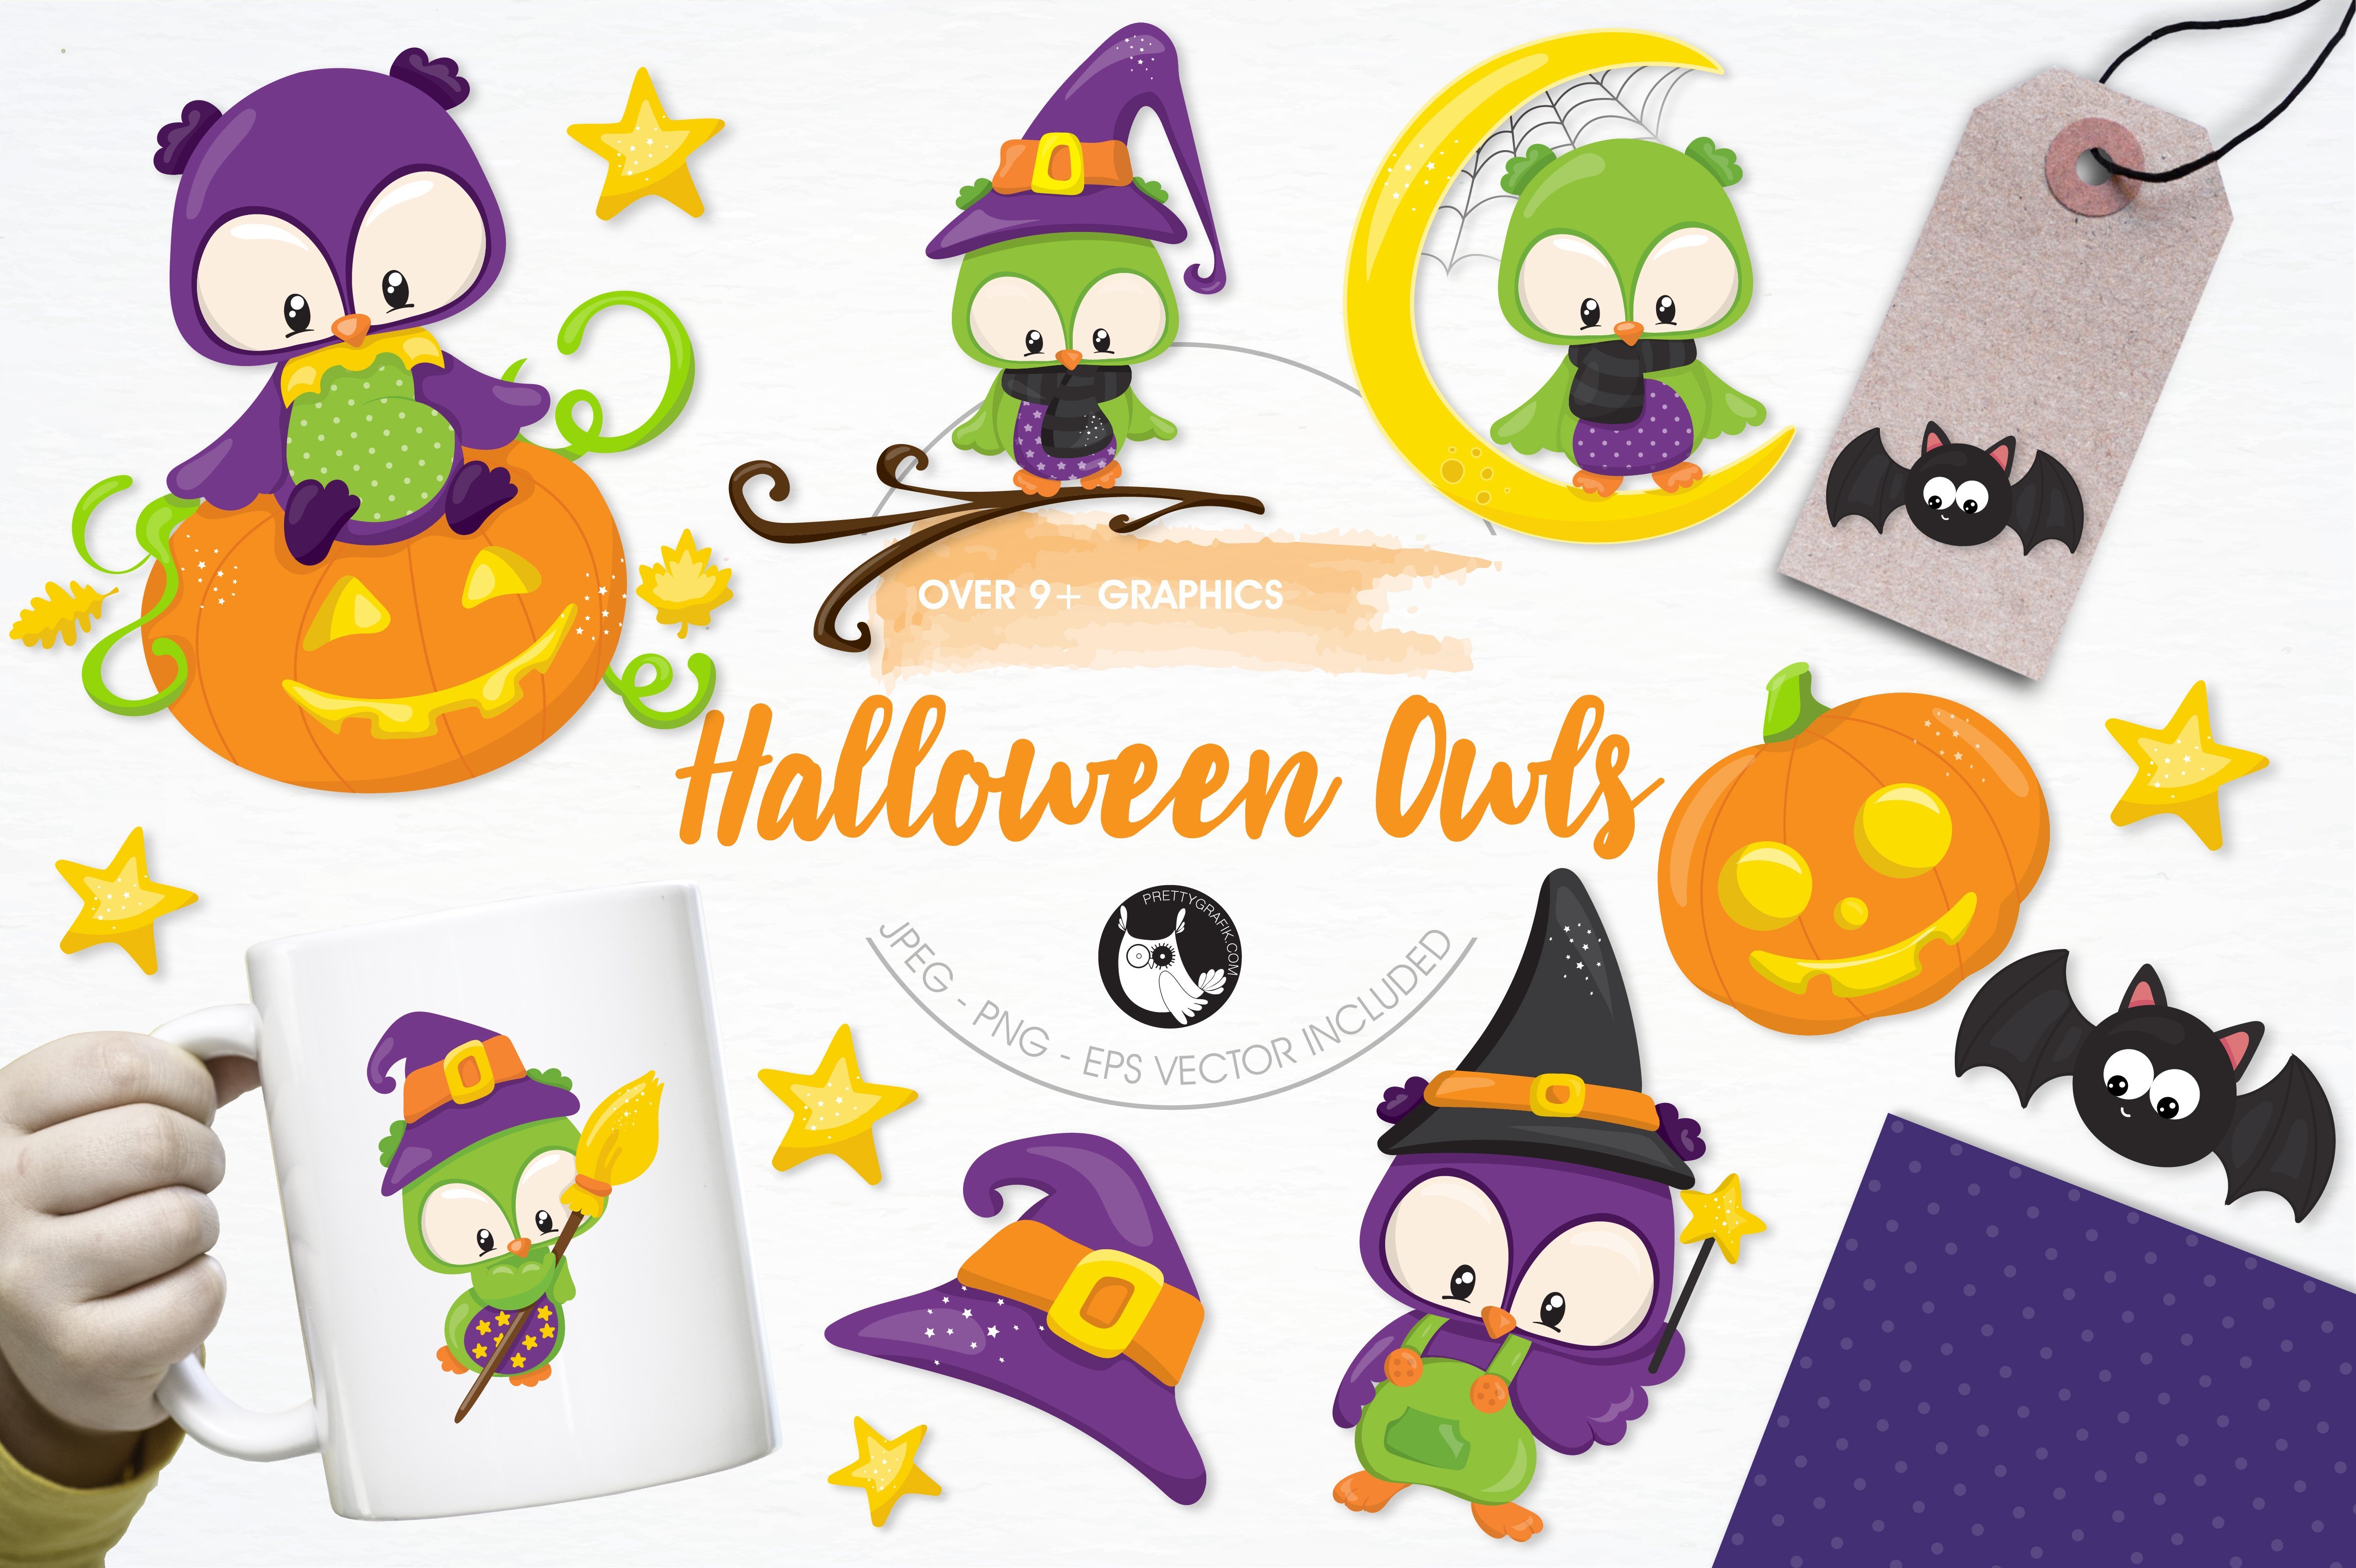 Halloween Owls Illustration Pack - Vector Image